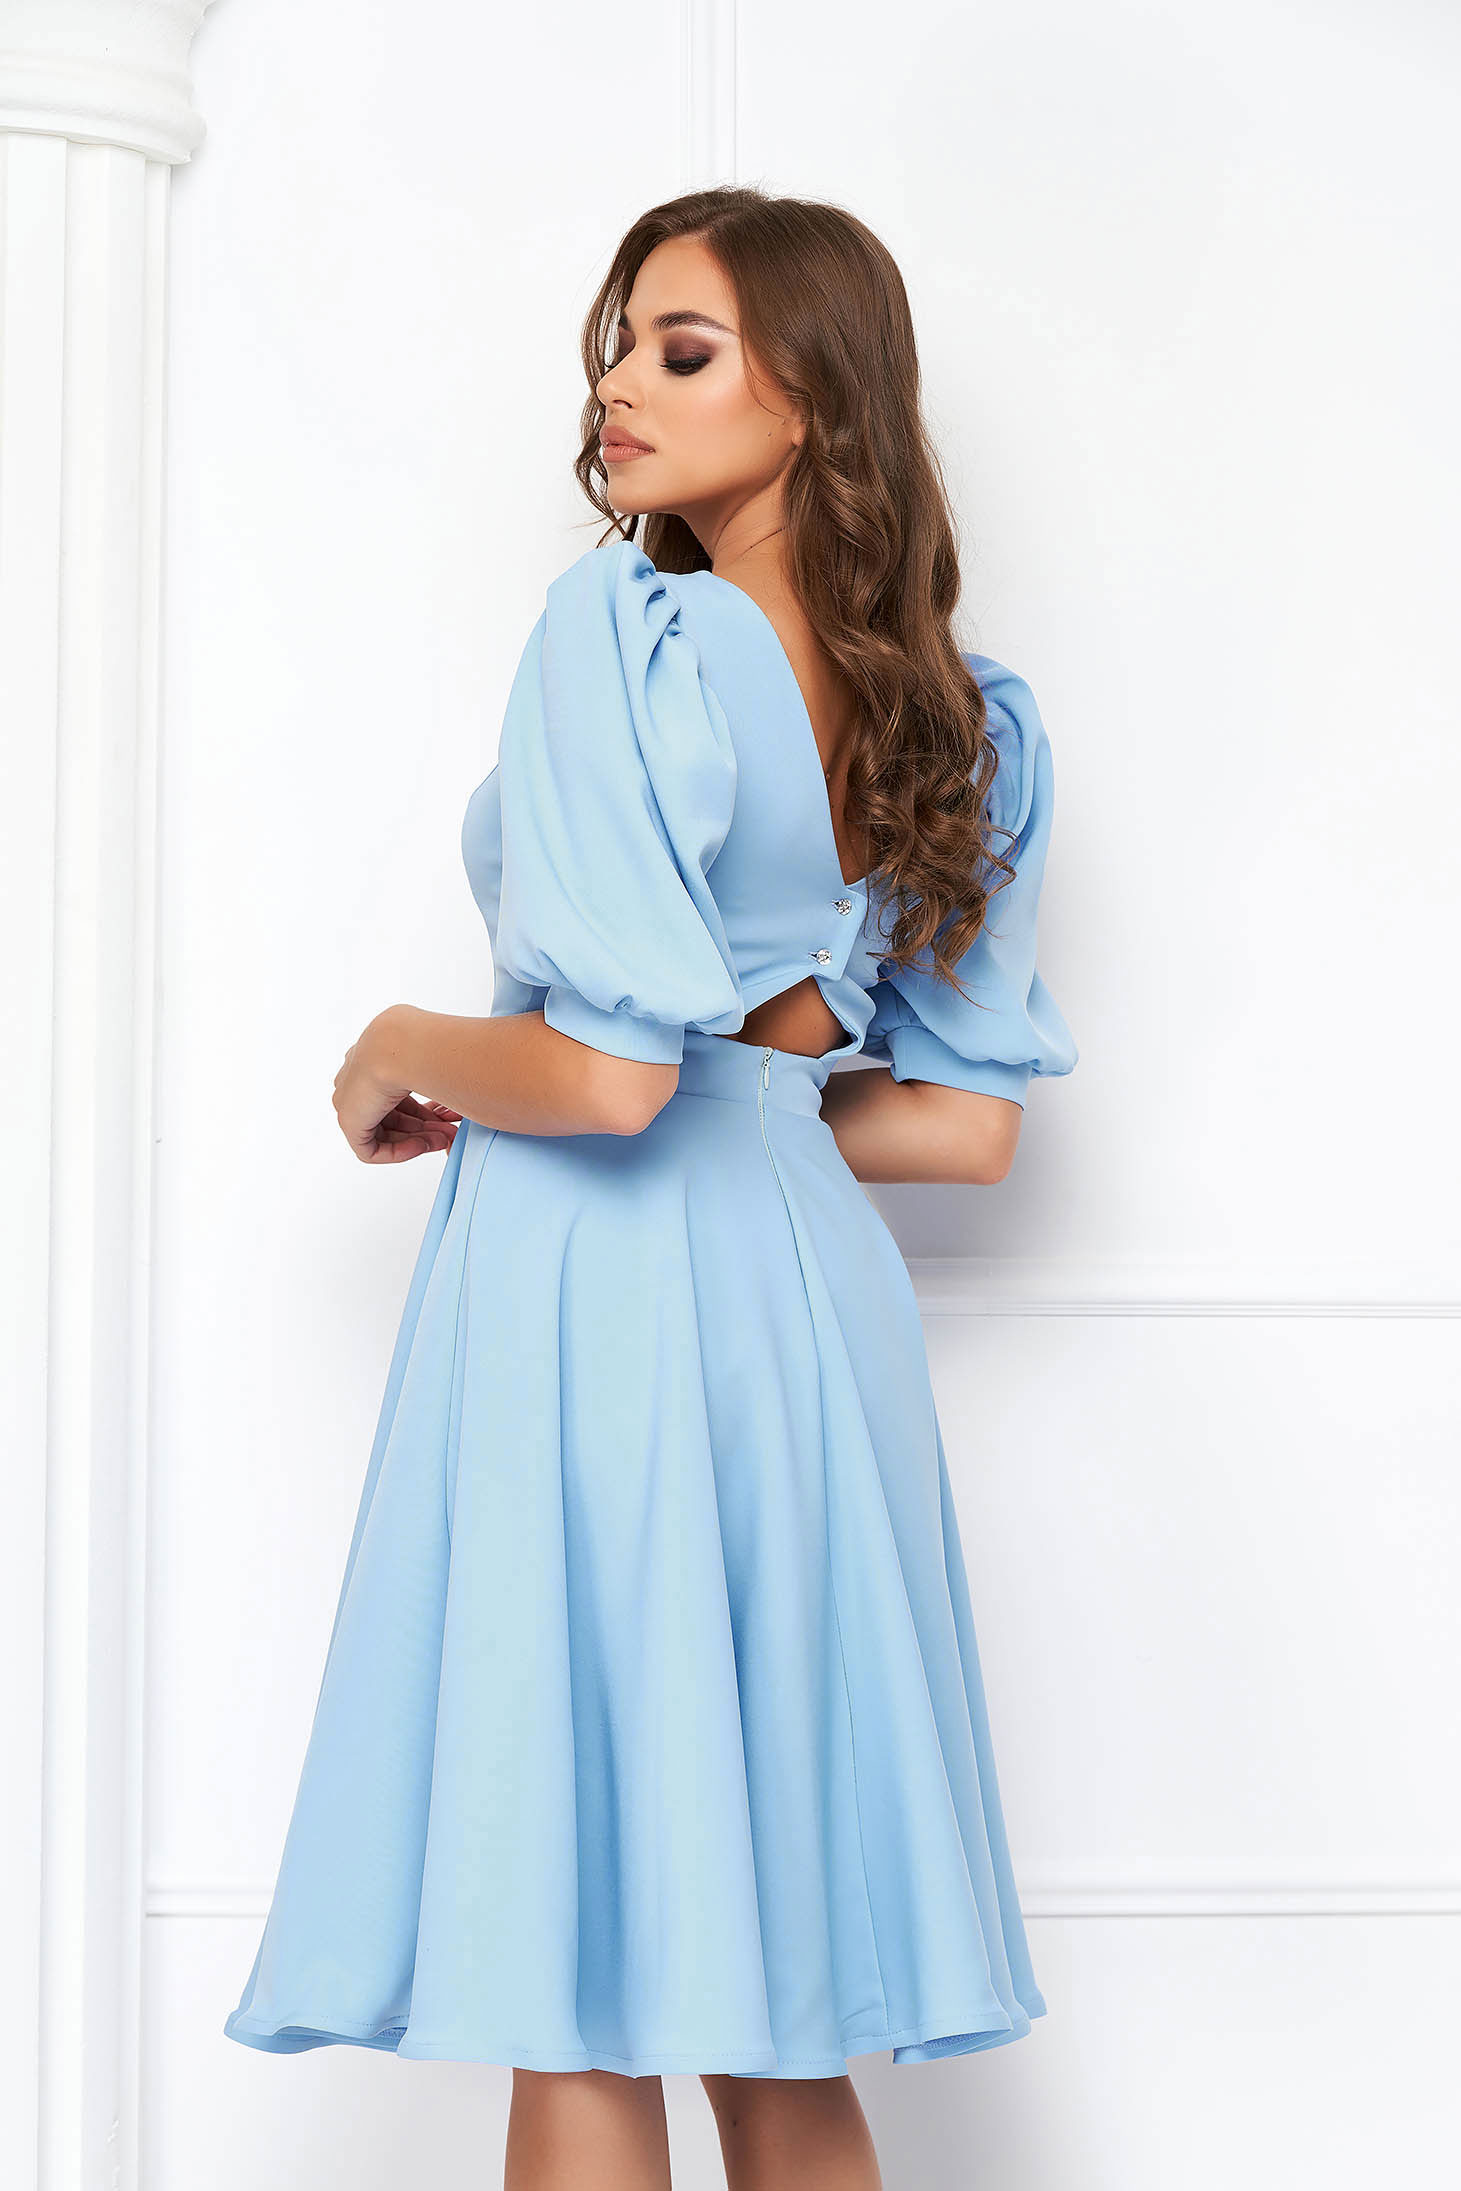 Aqua Blue Elastic Fabric Midi Dress in A-line with V-neck on the back - StarShinerS 2 - StarShinerS.com